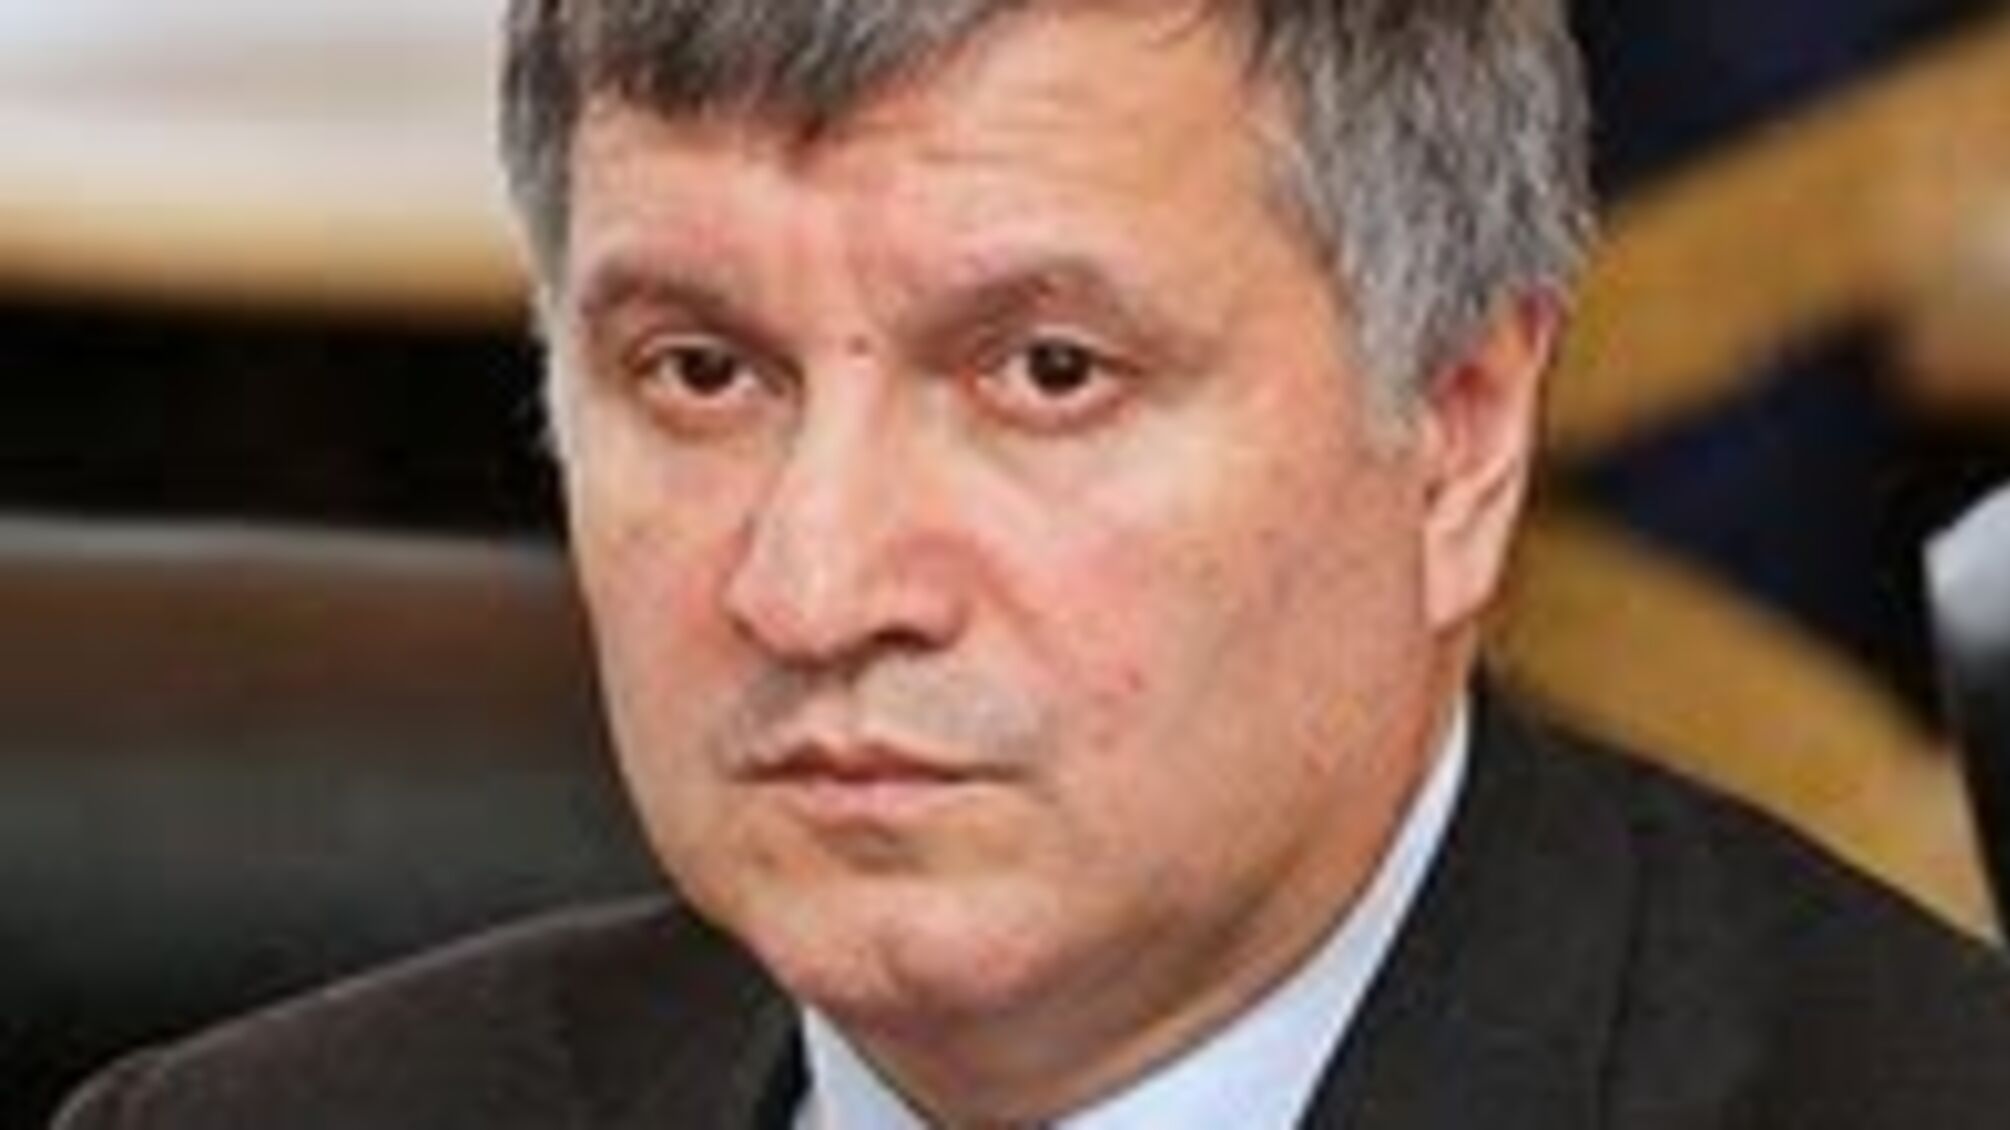 Аваков Арсен Борисович